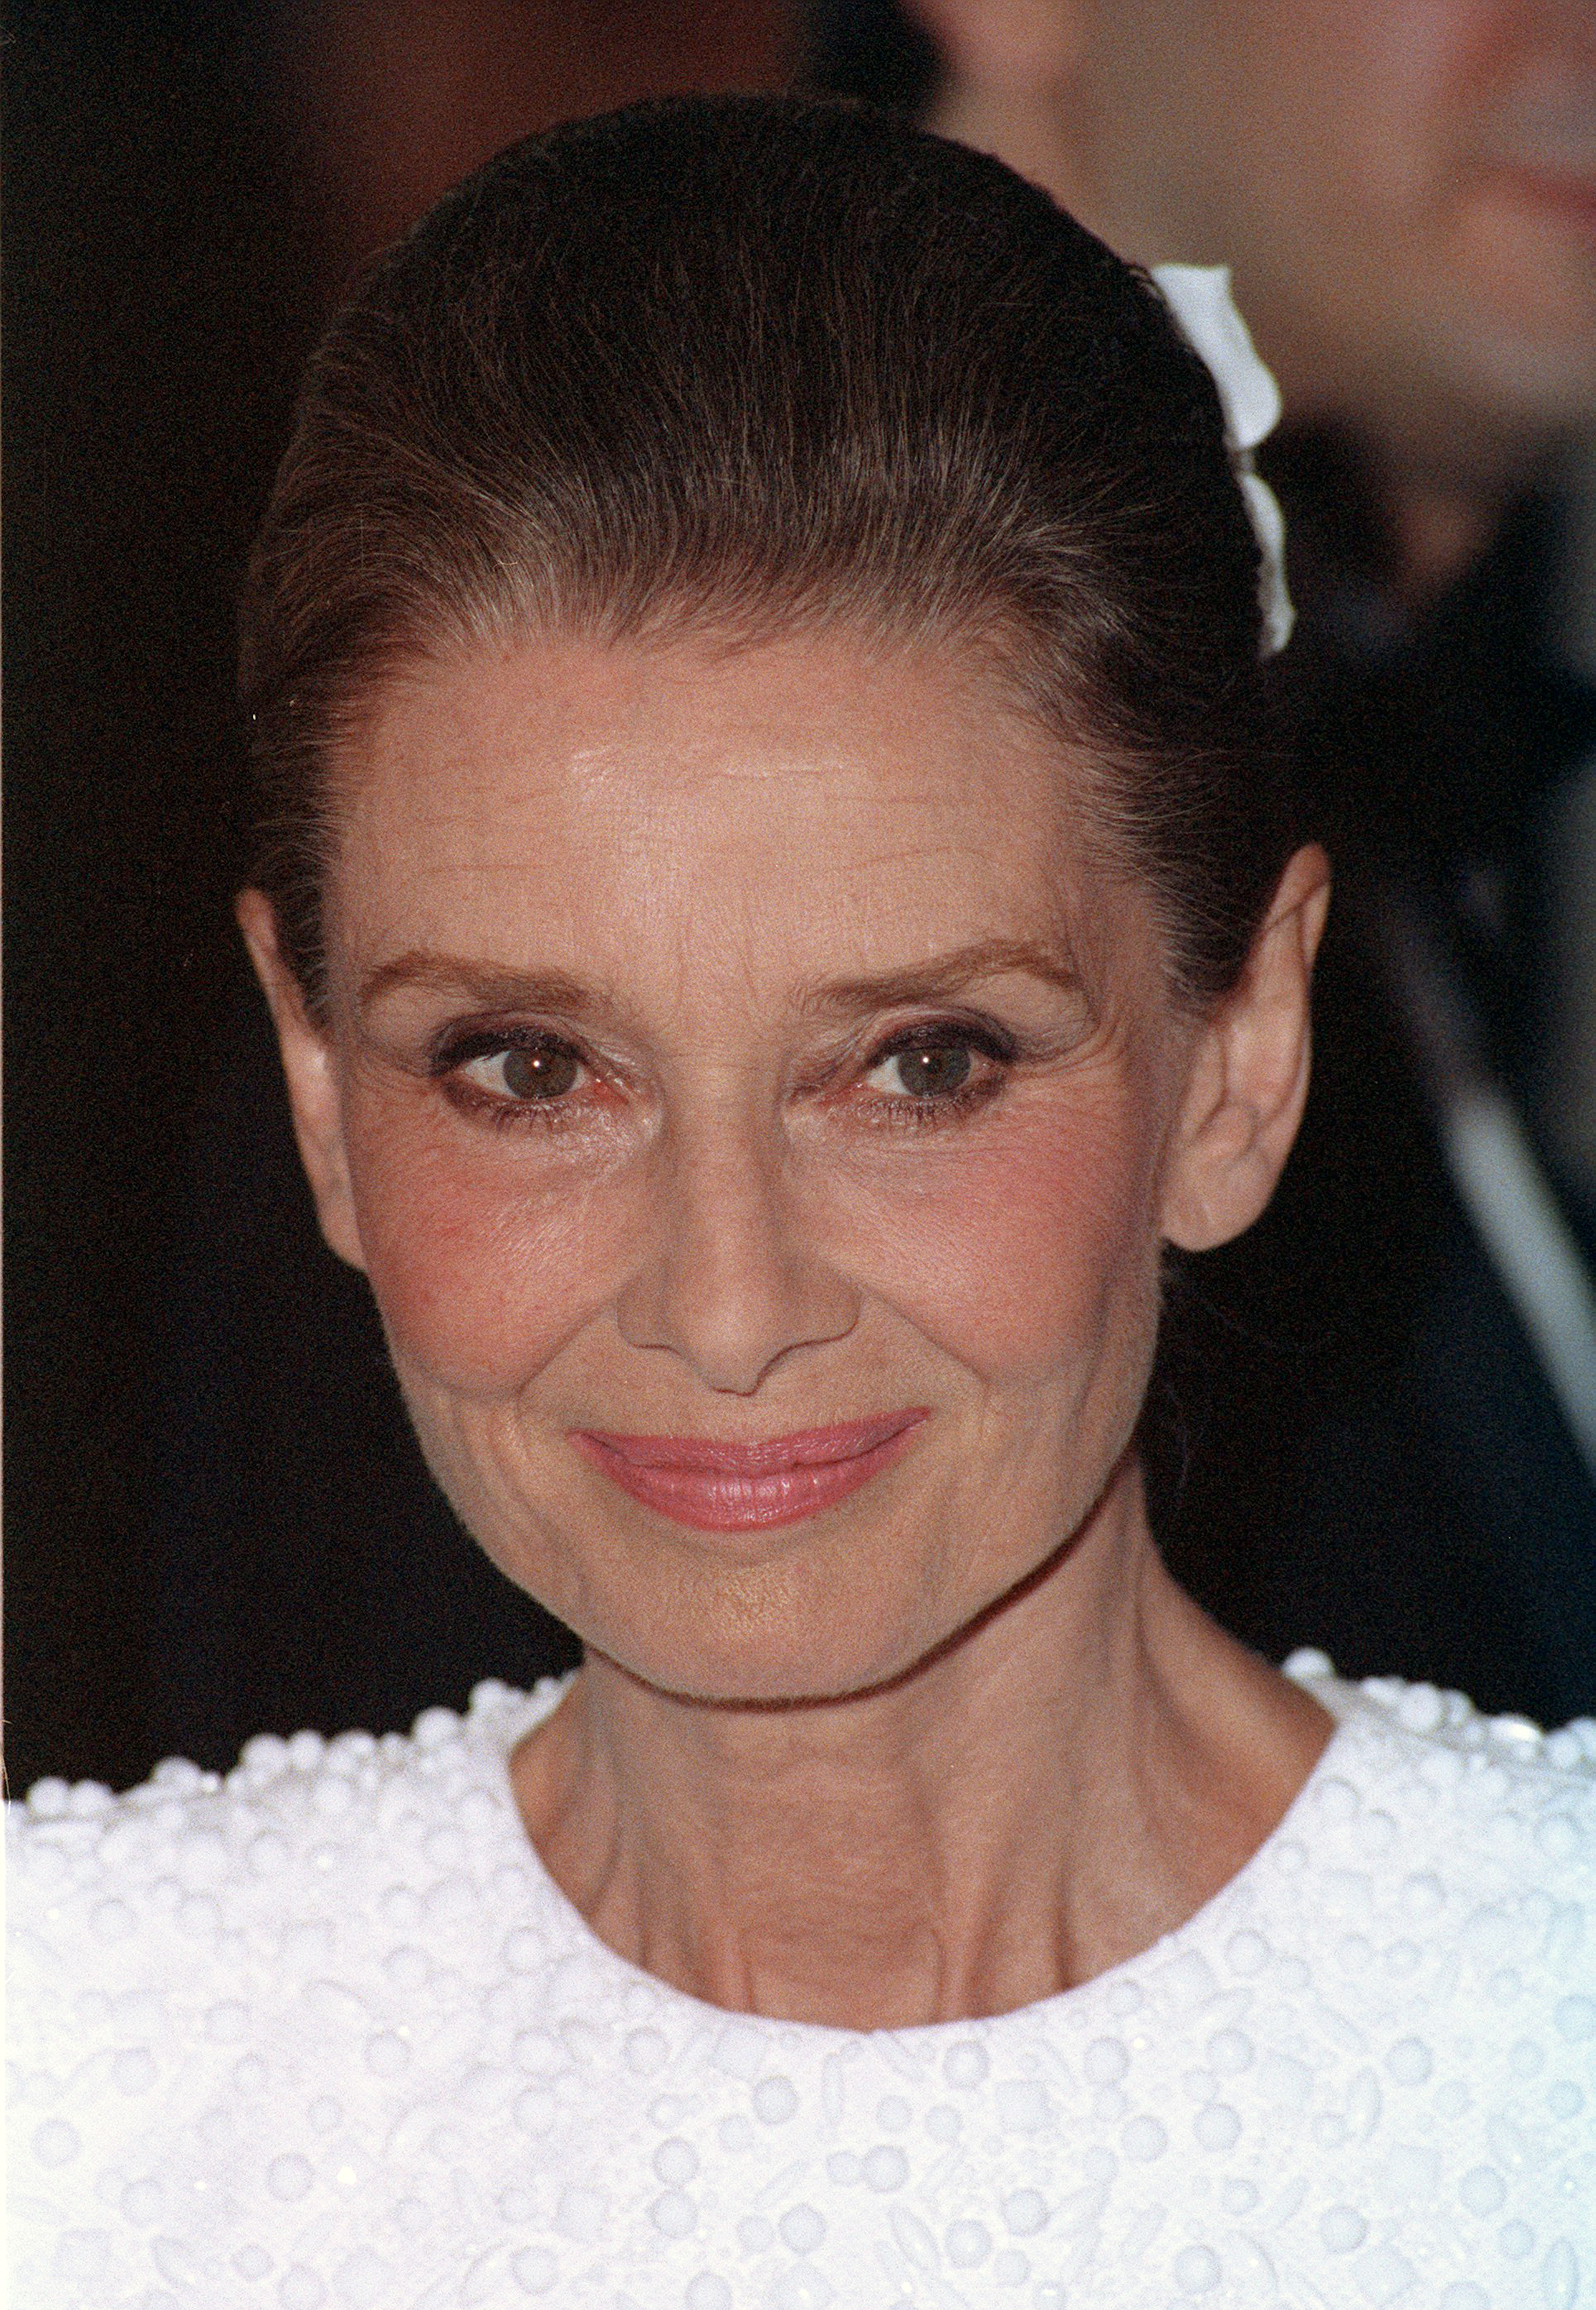 A portrait of Audrey Hepburn taken in 1992 | Source: Getty Images